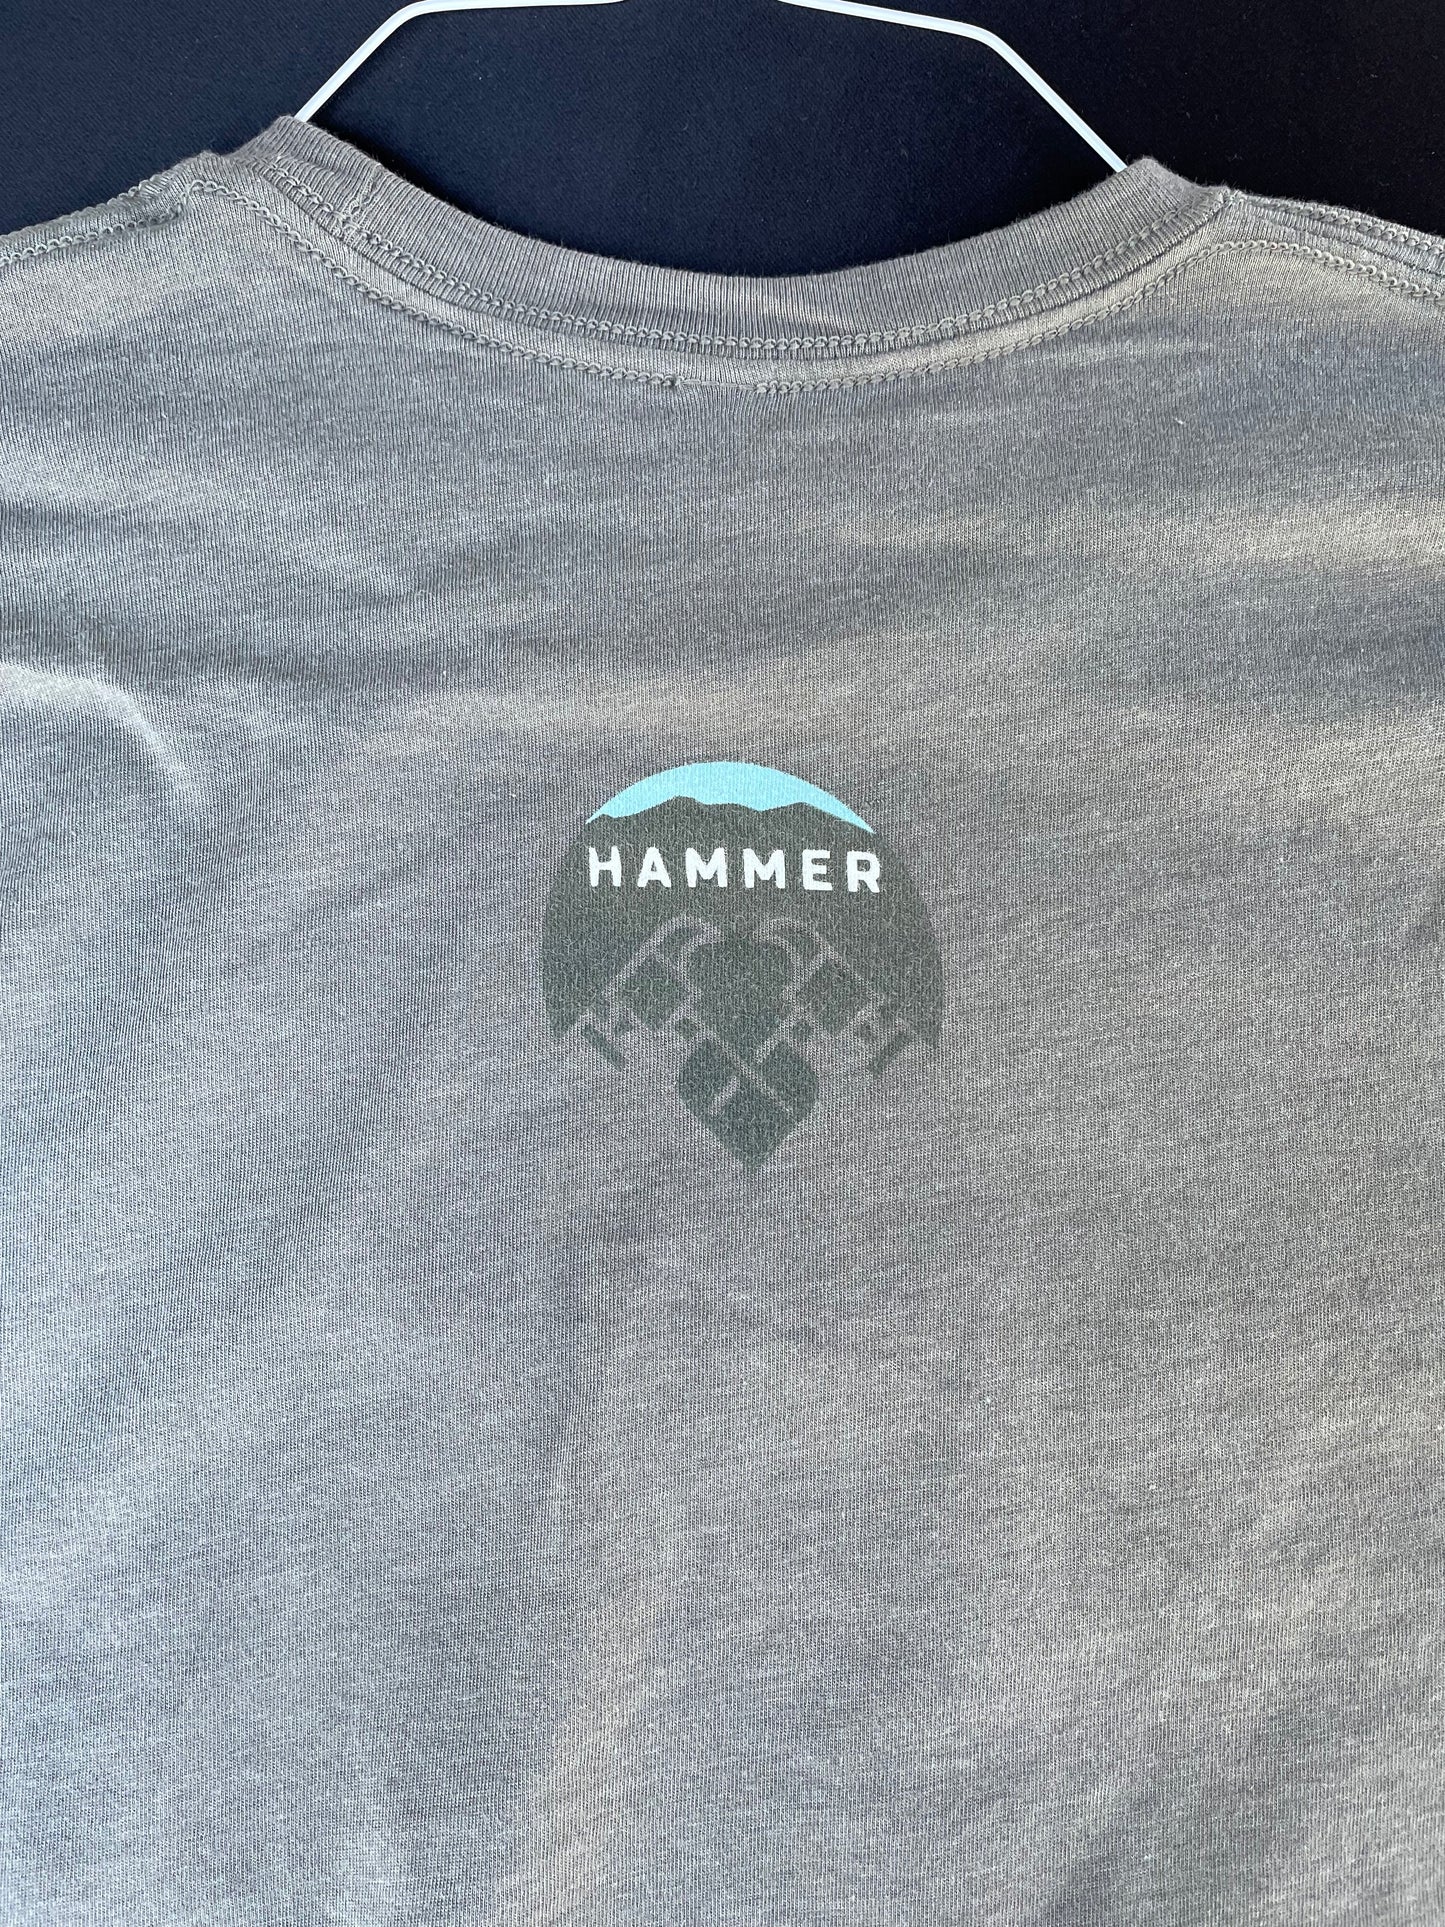 2021 Hammer Men's Commemorative T-Shirt